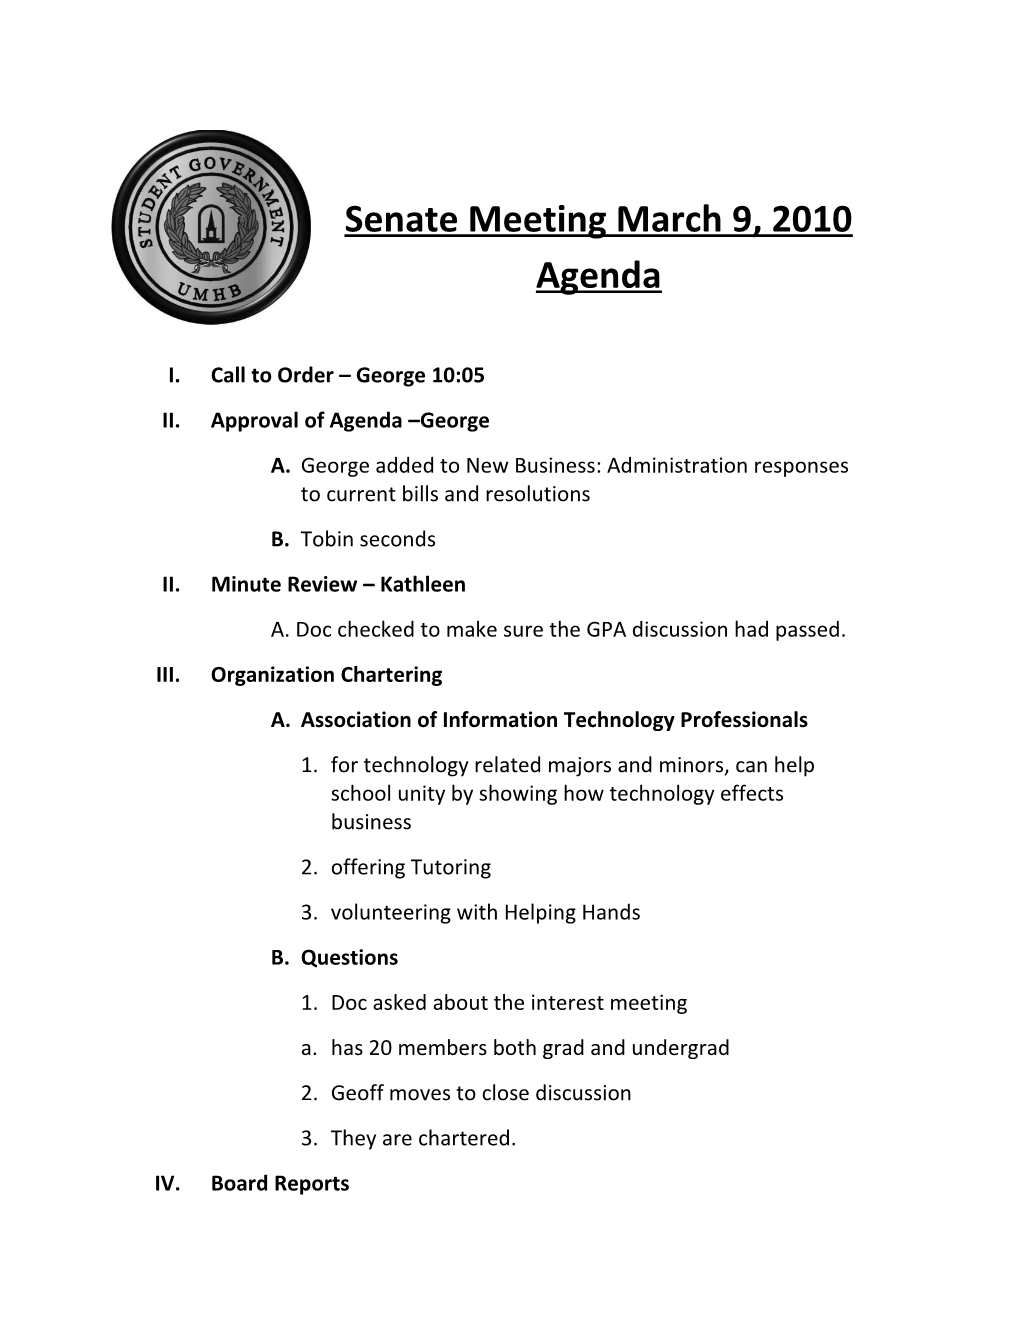 Senate Meeting March 9, 2010 Agenda